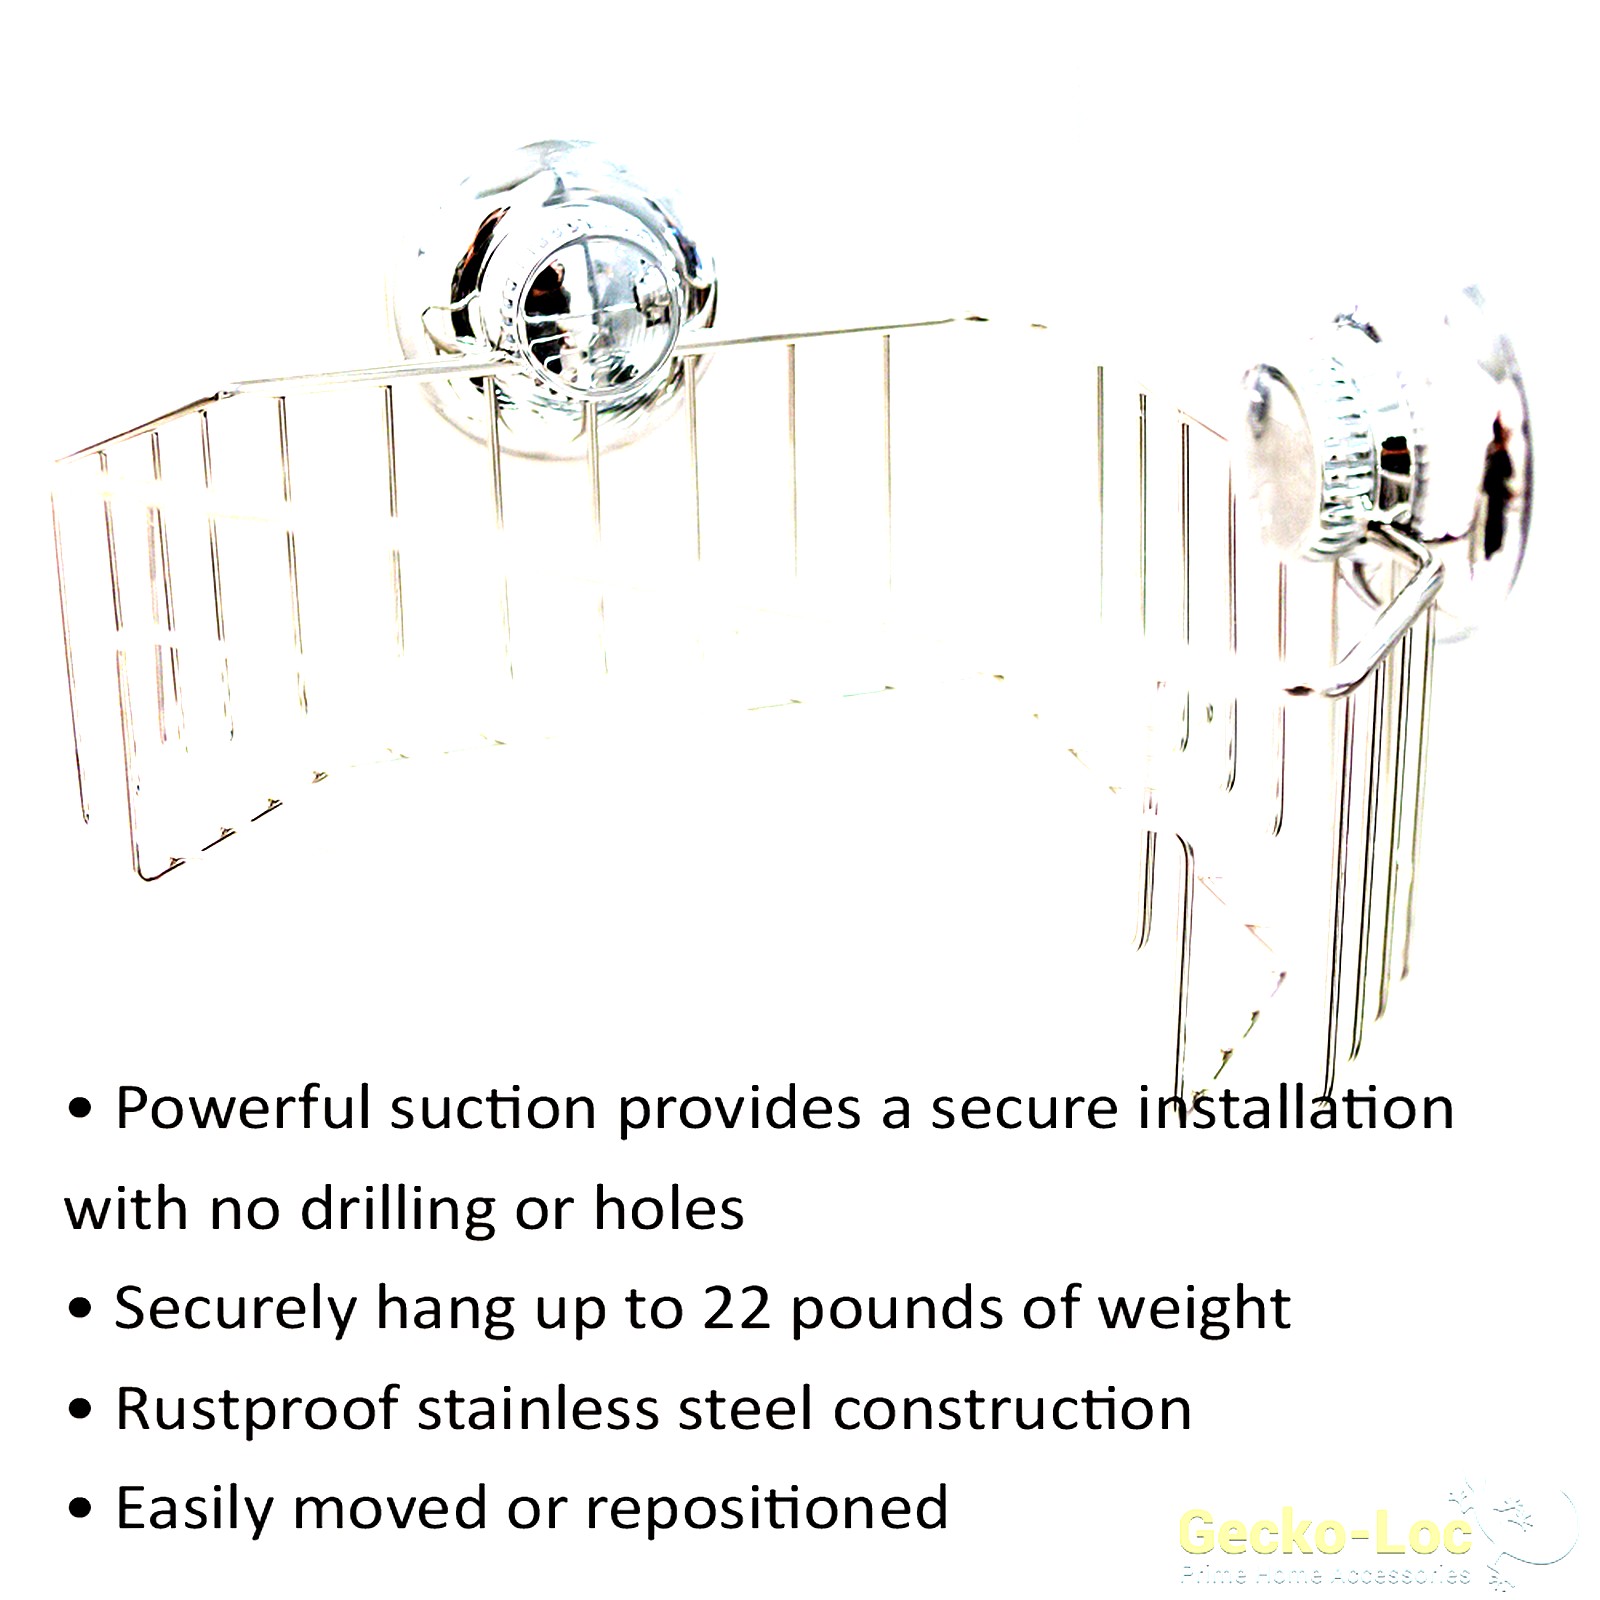 Gecko-Loc Black Heavy Duty Suction Cup Bathroom Storage Basket Shelf Shower Caddy Stainless Steel